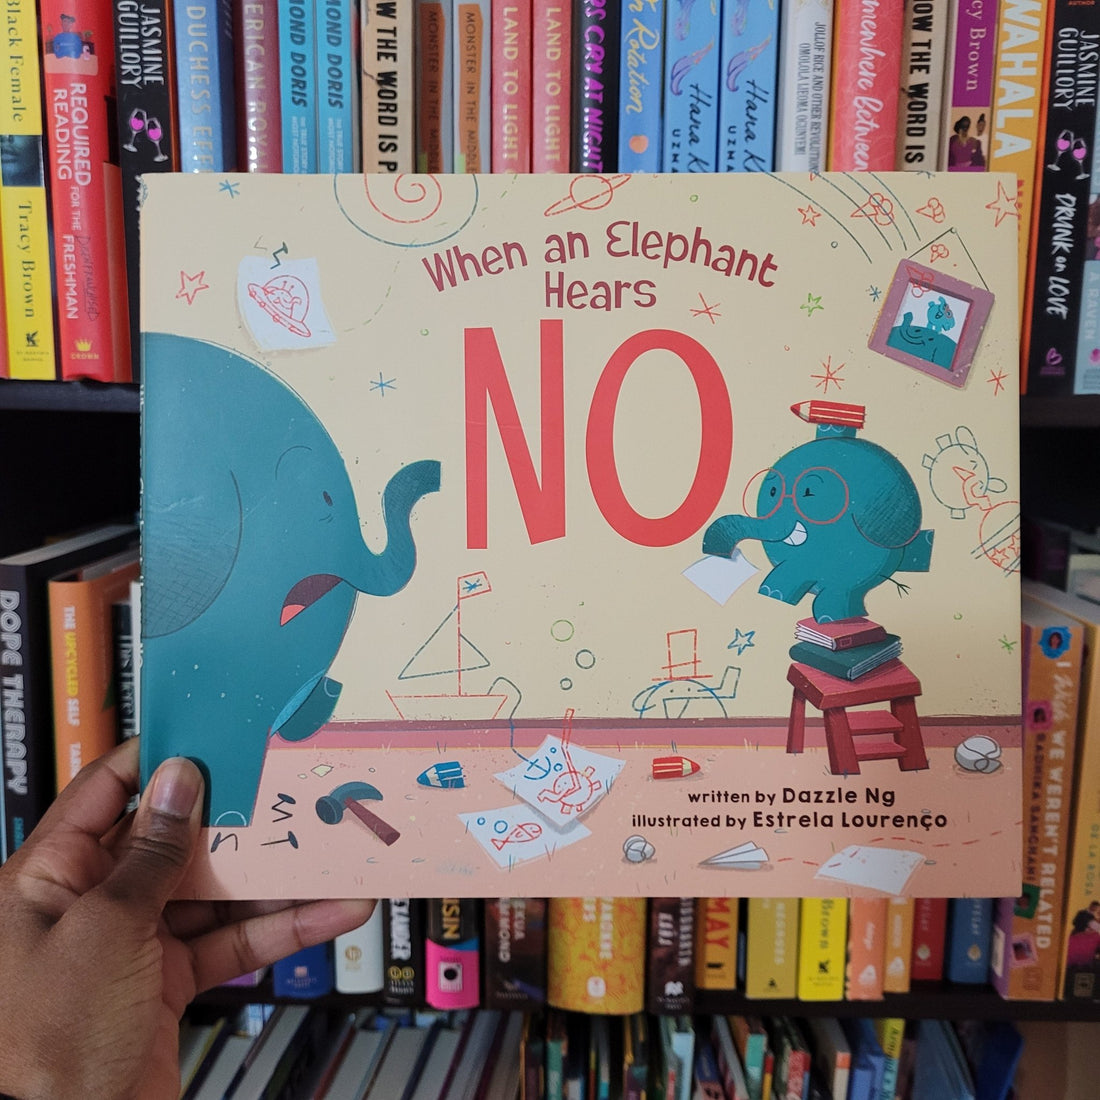 Pub Day: When an Elephant Hears a No by Dazzle Ng and illustrated by Estrela Lourenço - Tuma's Books